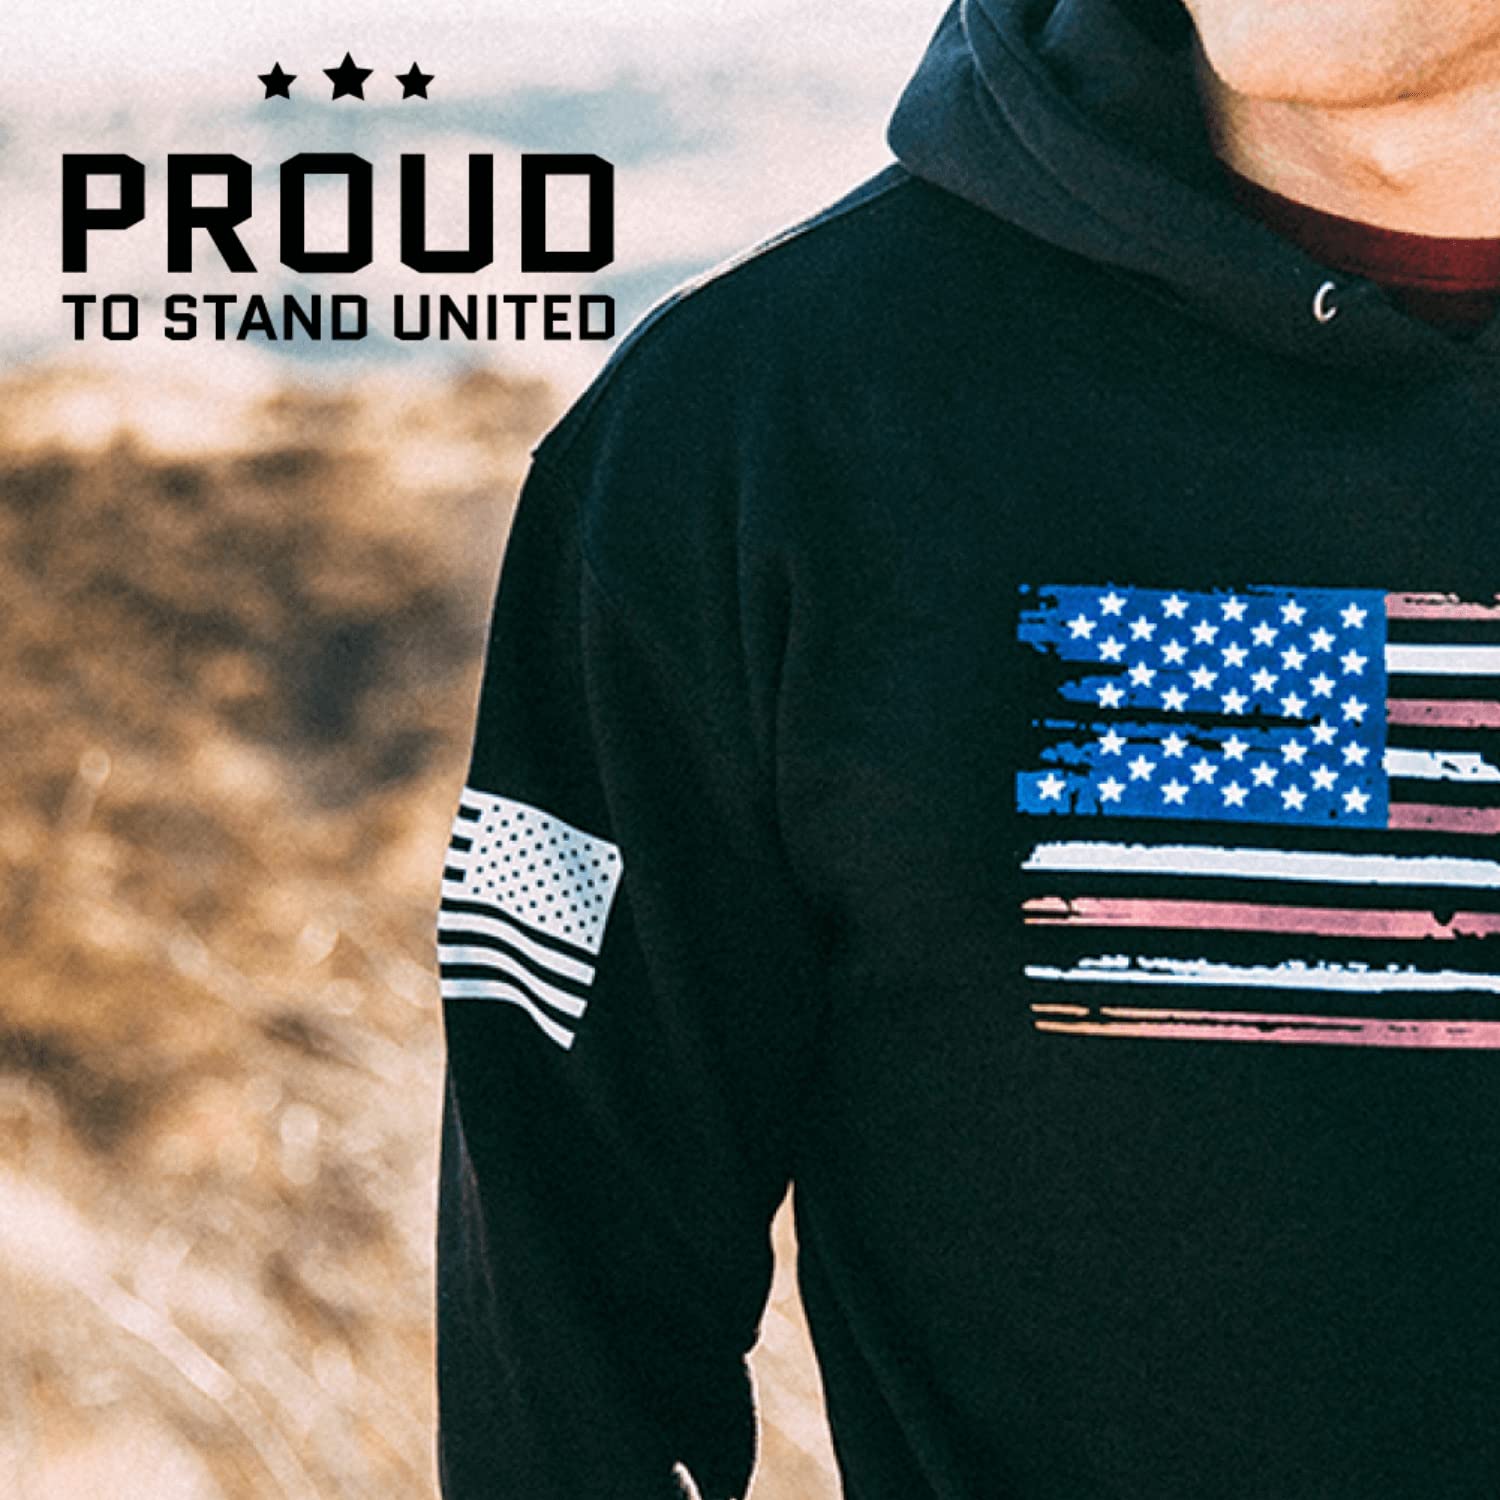 Tactical Pro Supply USA Sweatshirt Hoodie - American Flag Patriotic Jacket Sweater for Men or Women